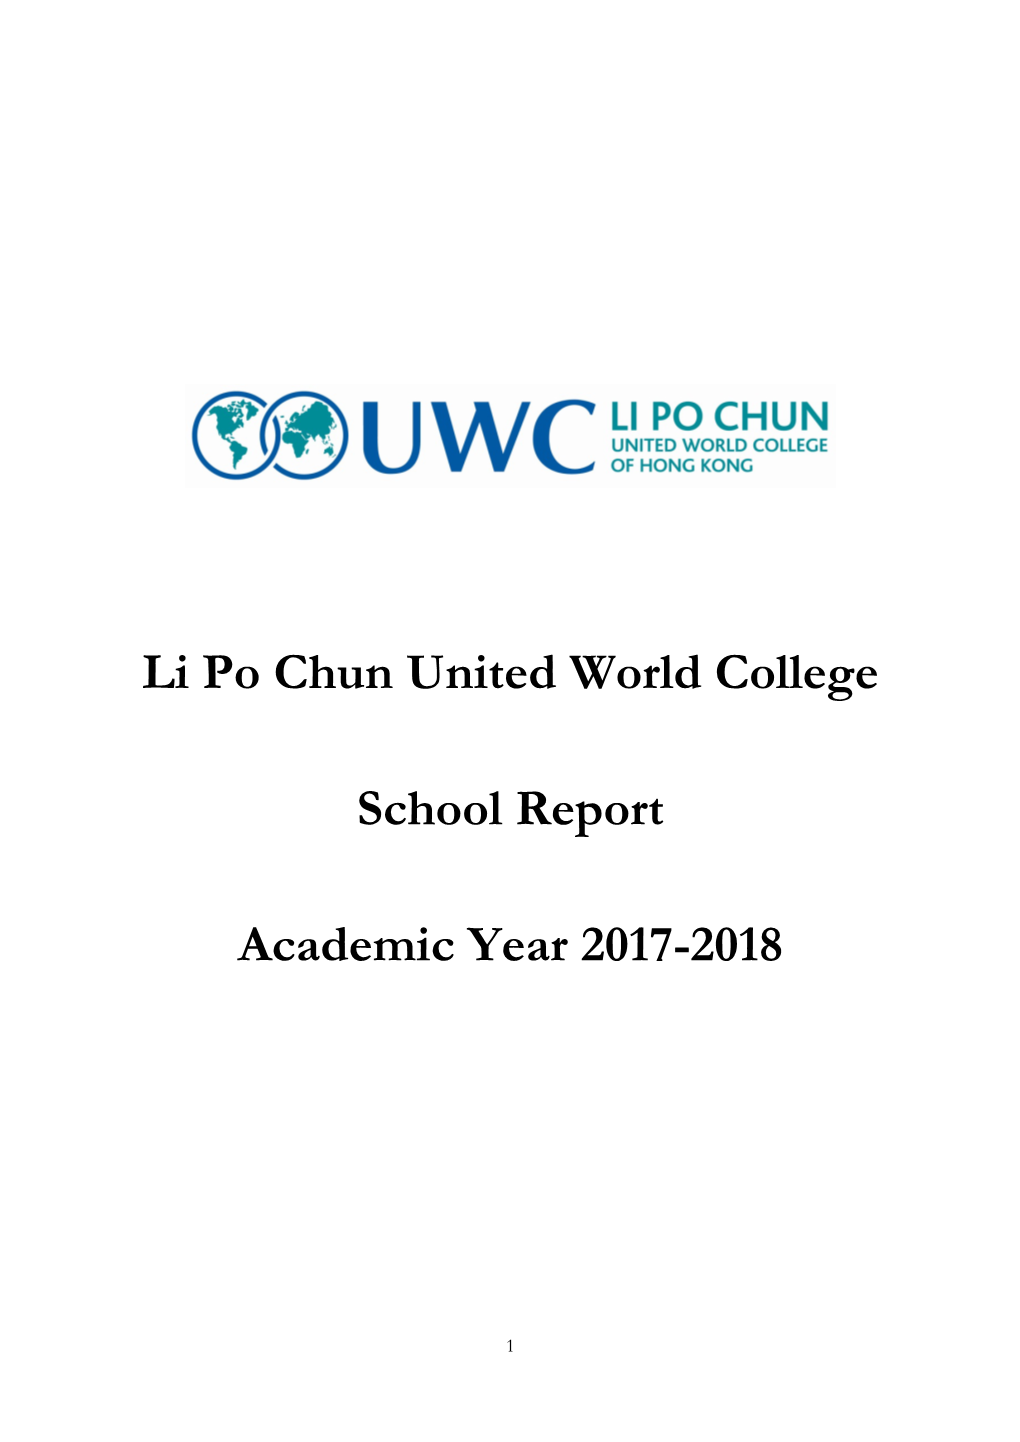 Li Po Chun United World College School Report Academic Year 2017